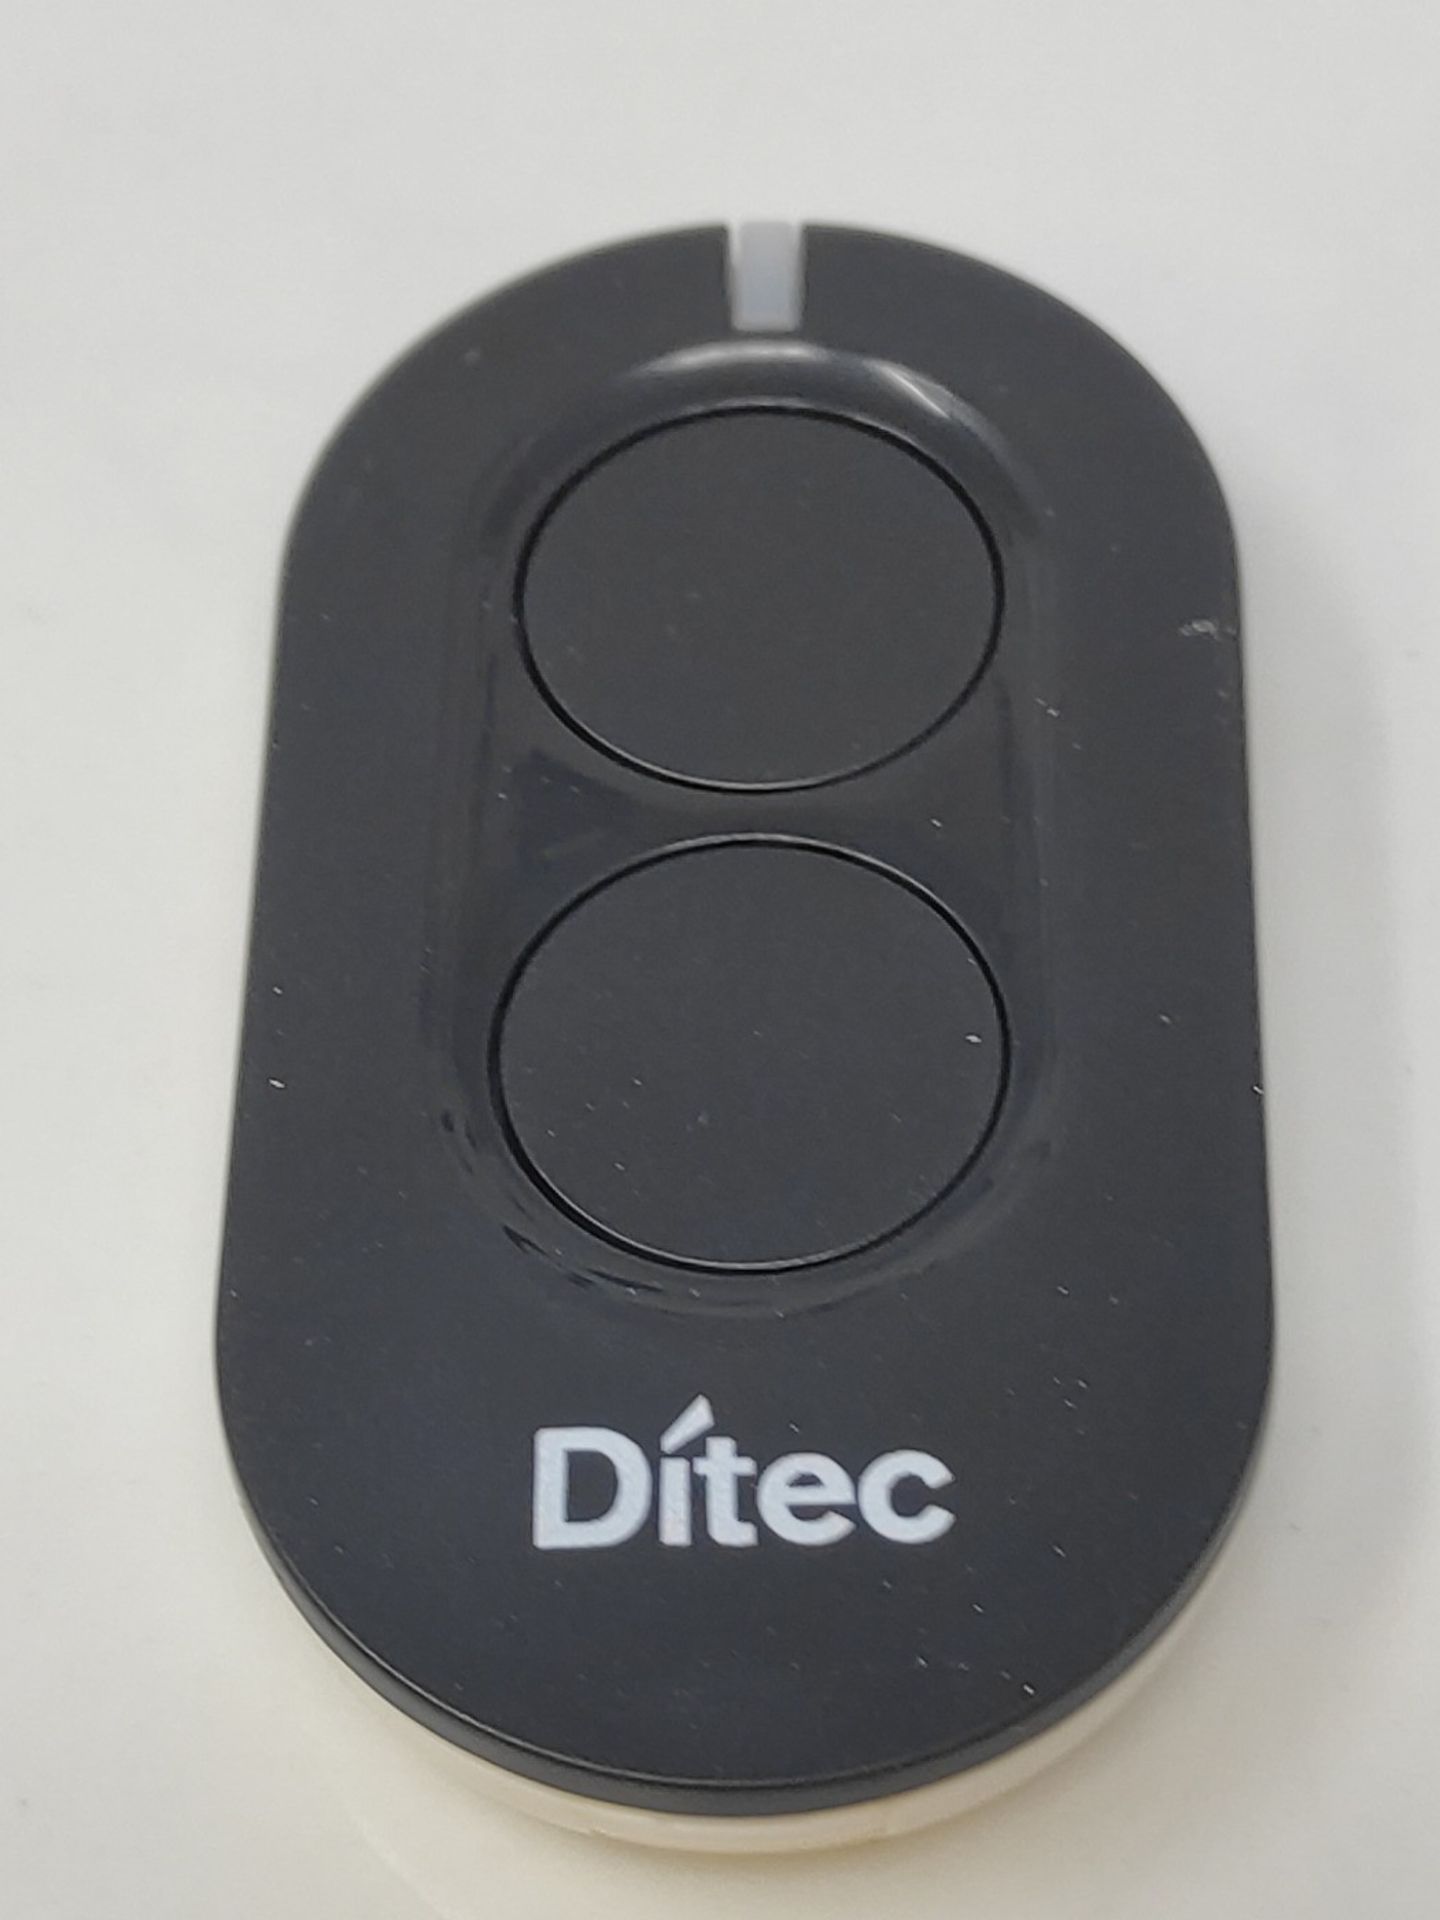 DITEC ENTREMATIC ZEN2 Remote Control Rolling Code 433.92 MHz - Image 2 of 2